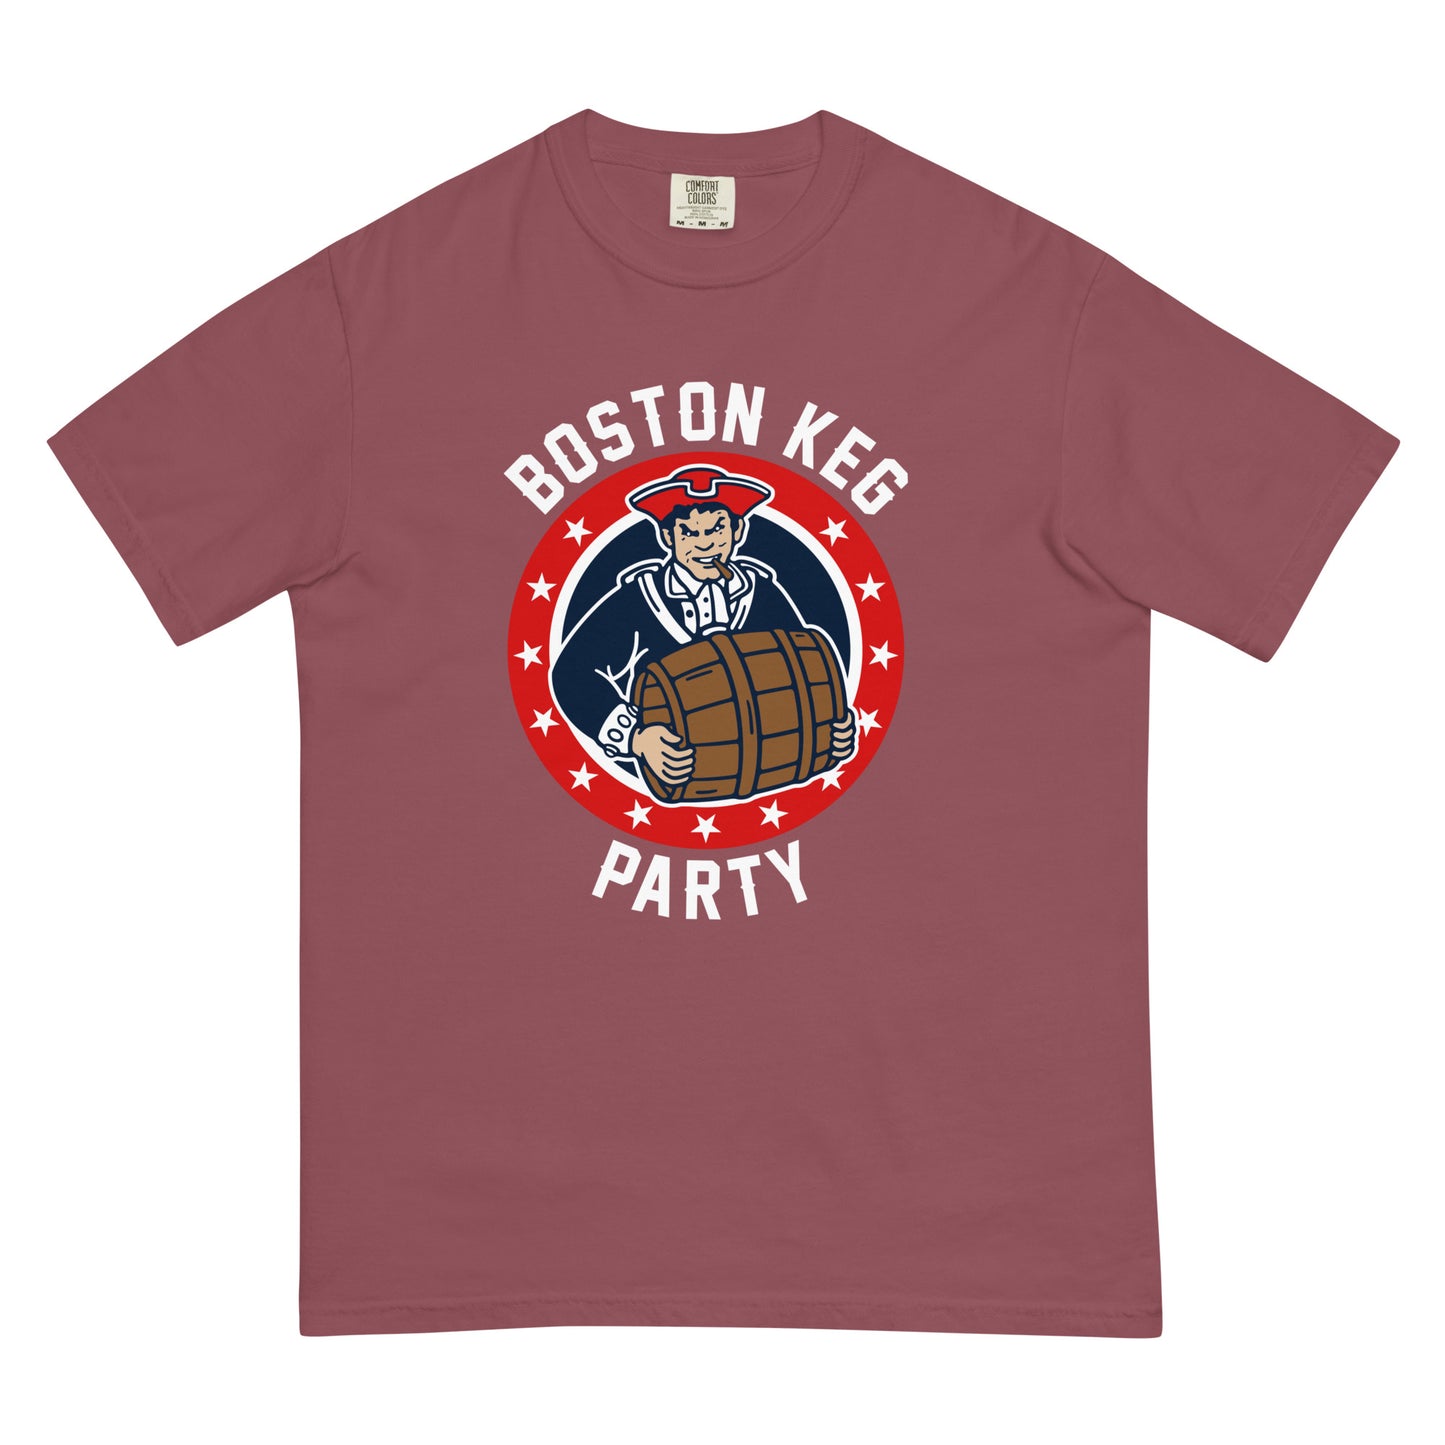 Boston Keg Party II